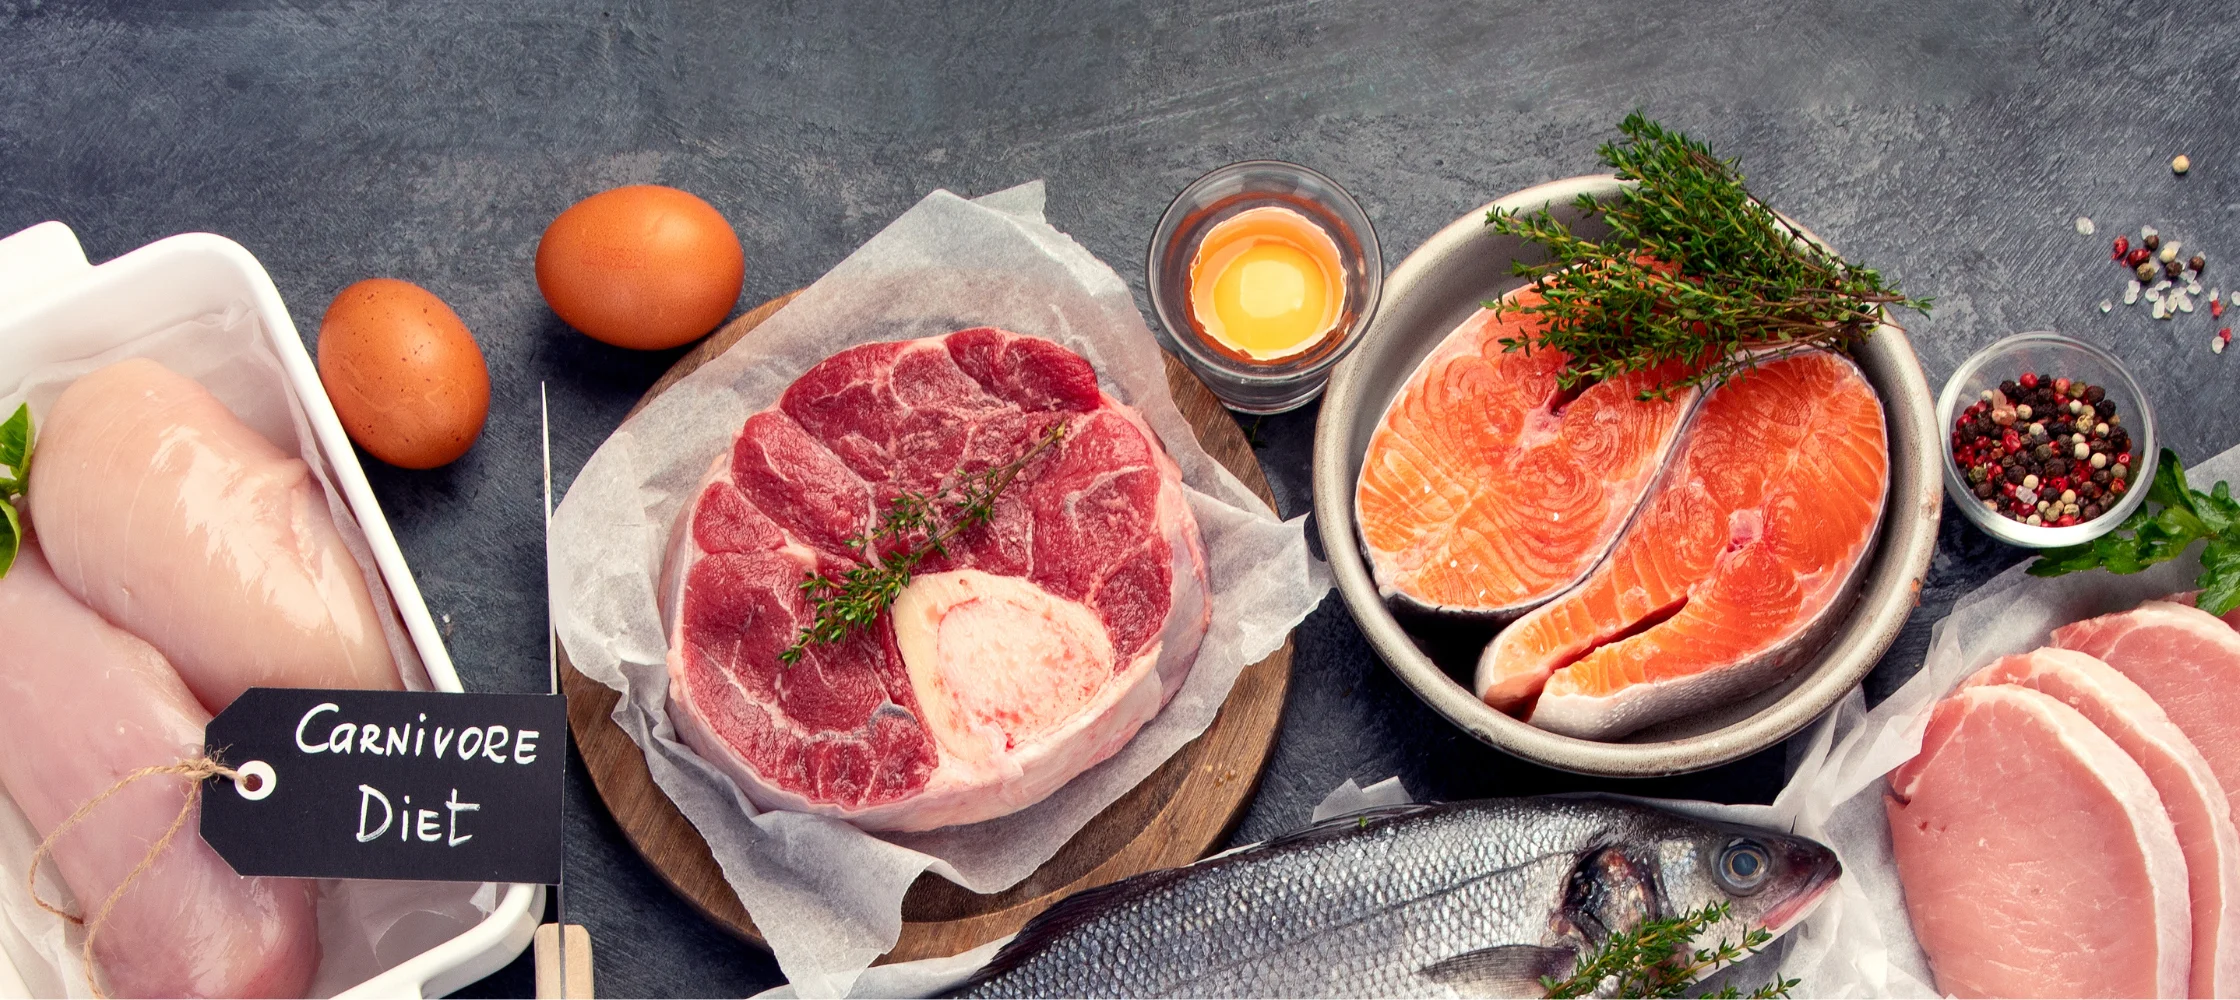 the-carnivore-diet-phenomenon--benefits-and-risks